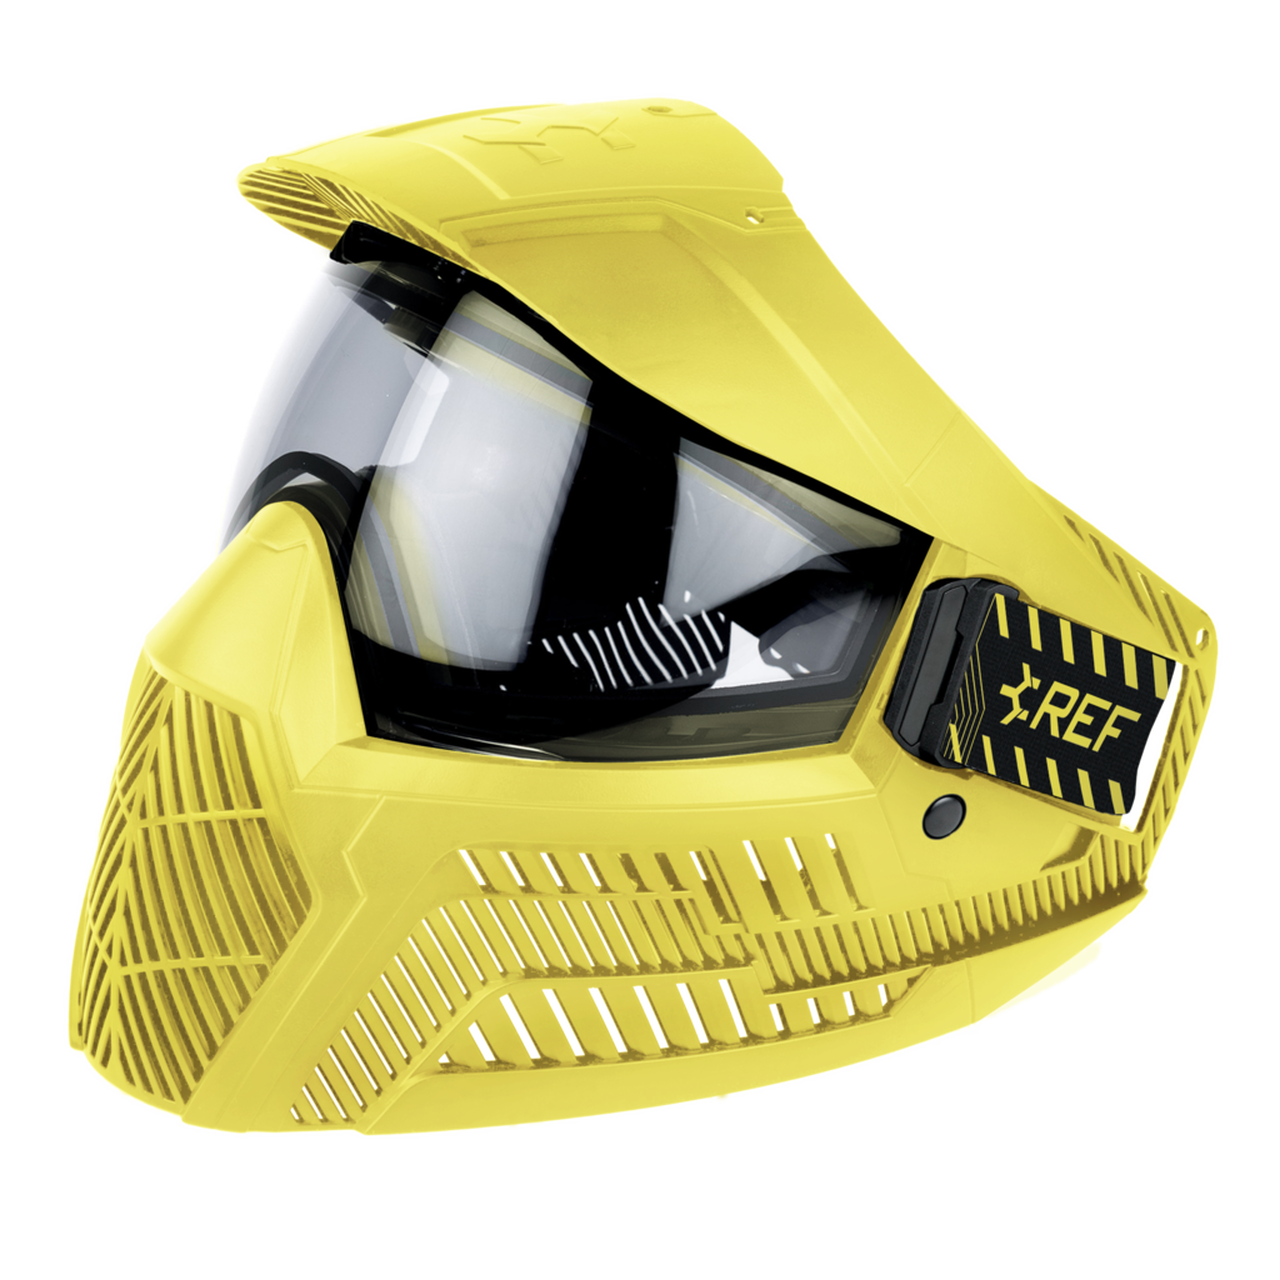 BASE - GS-O - YELLOW Paintball Mask - Command Elite Hobbies